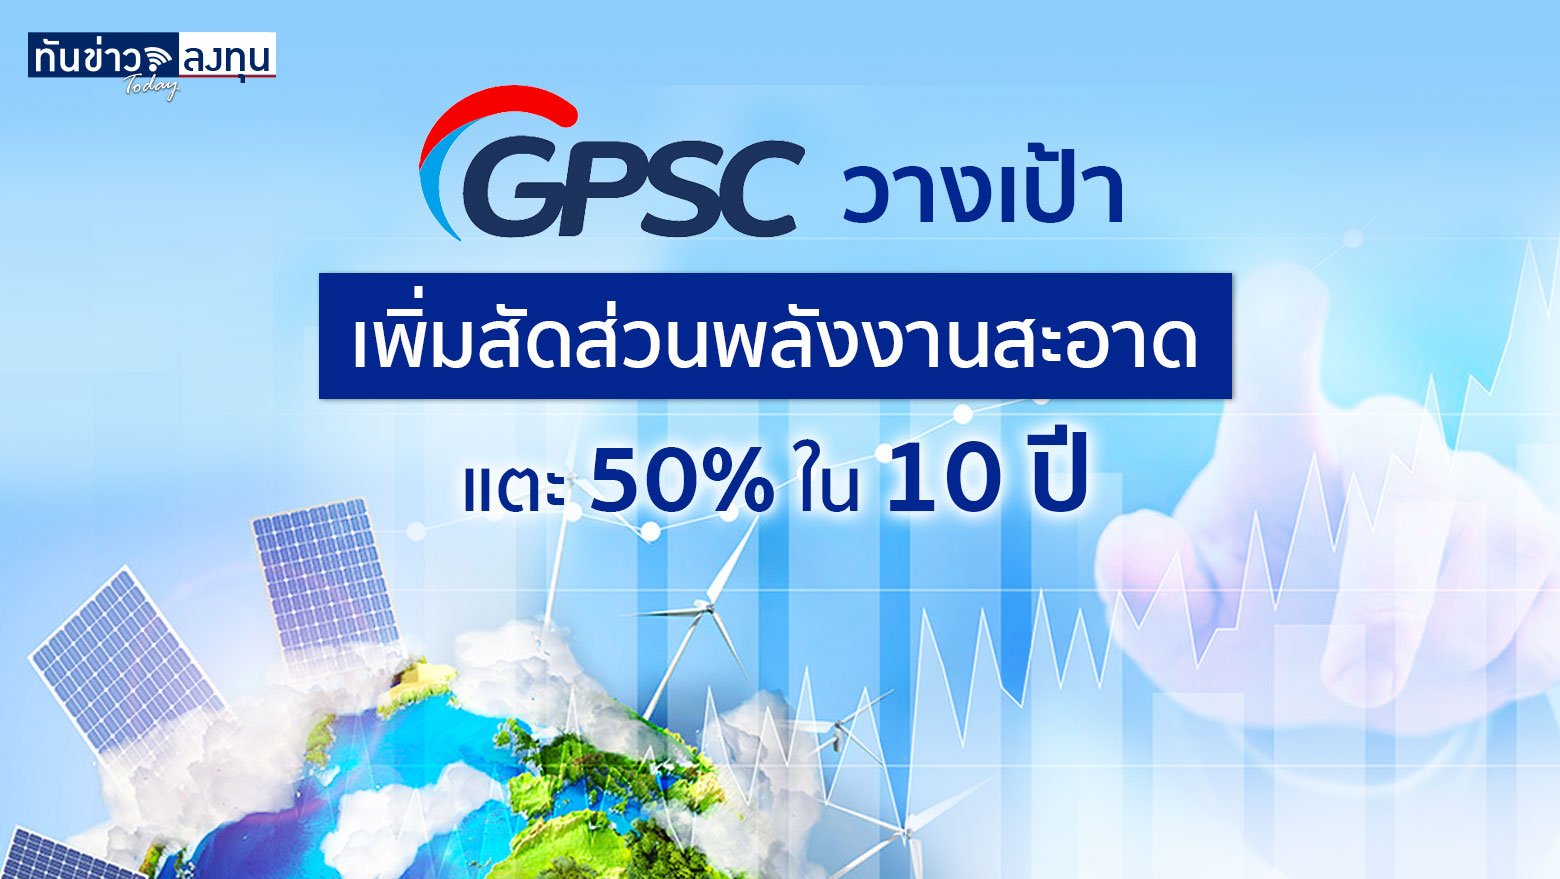 GPSC วางเป้า เพิ่มสัดส่วนพลังงานสะอาดแตะ 50% ใน 10 ปี